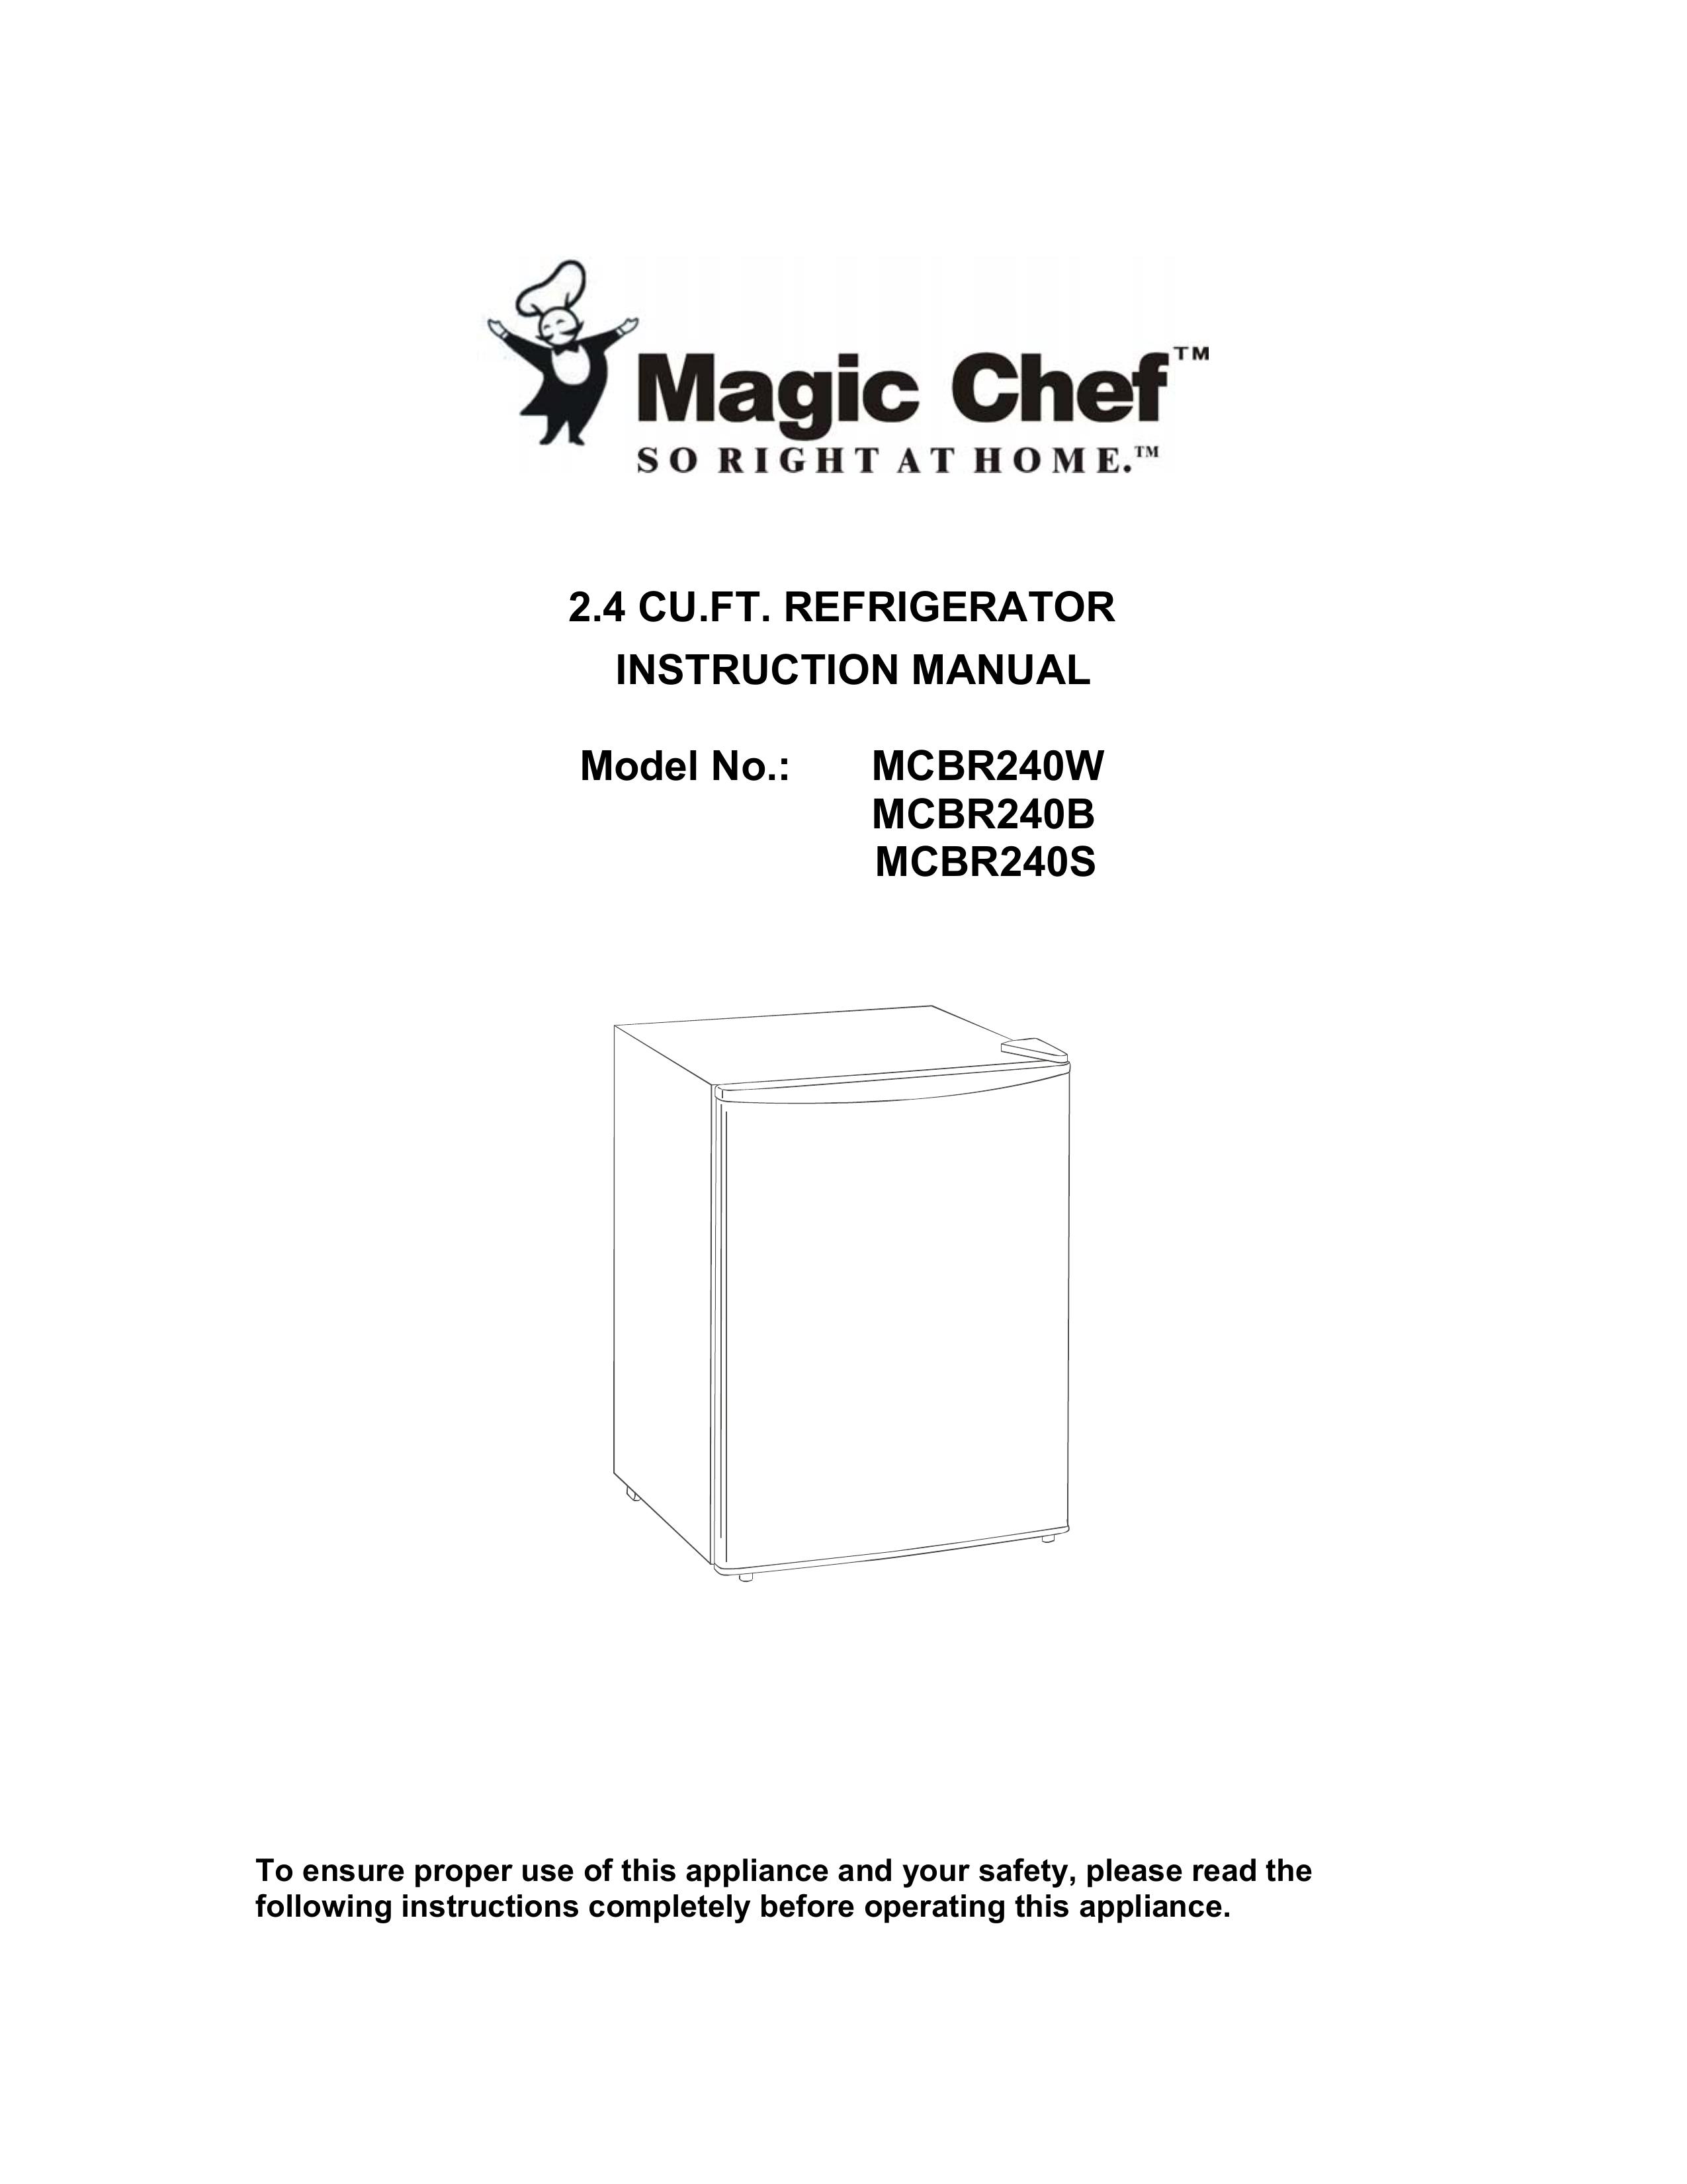 Magic Chef MCBR240S Refrigerator User Manual